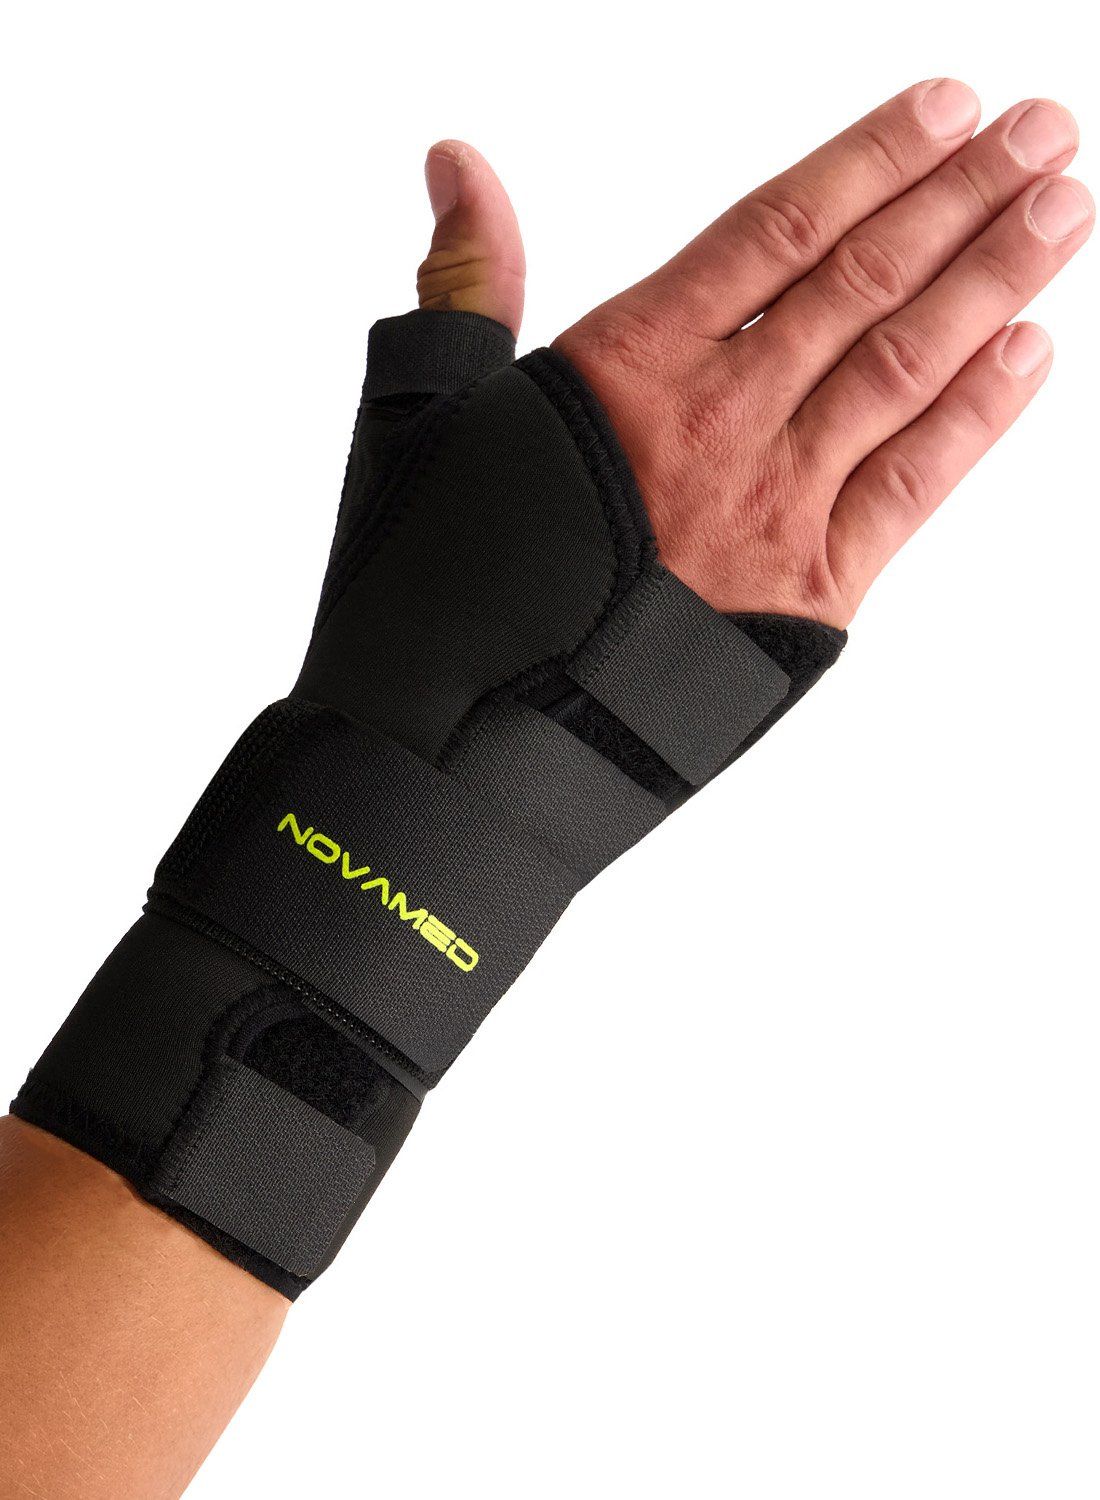 novamed thumb support wrist splint for sale